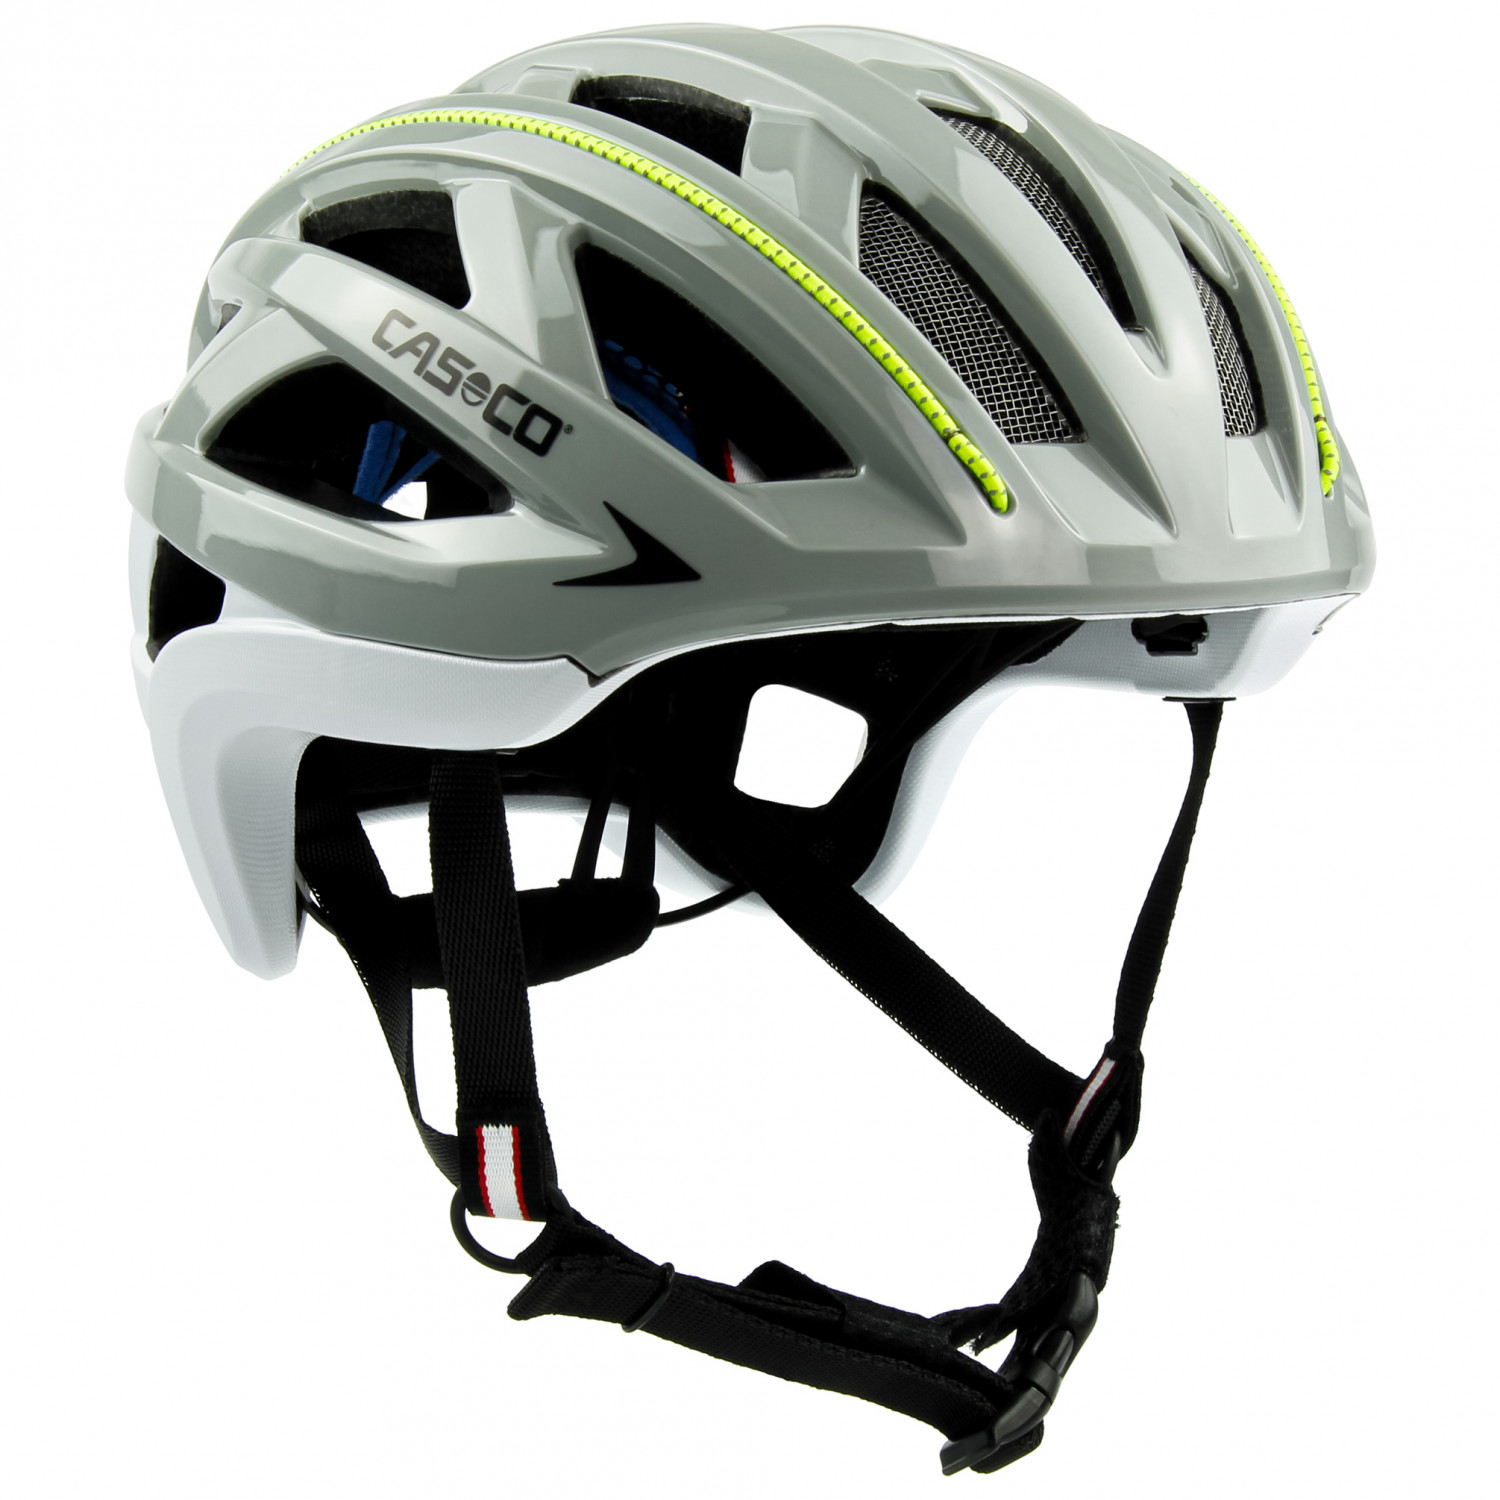 Велосипедный шлем Casco Cuda 2 Strada, цвет Grey/White/Neon велосипедный шлем casco cuda 2 04 1634 l